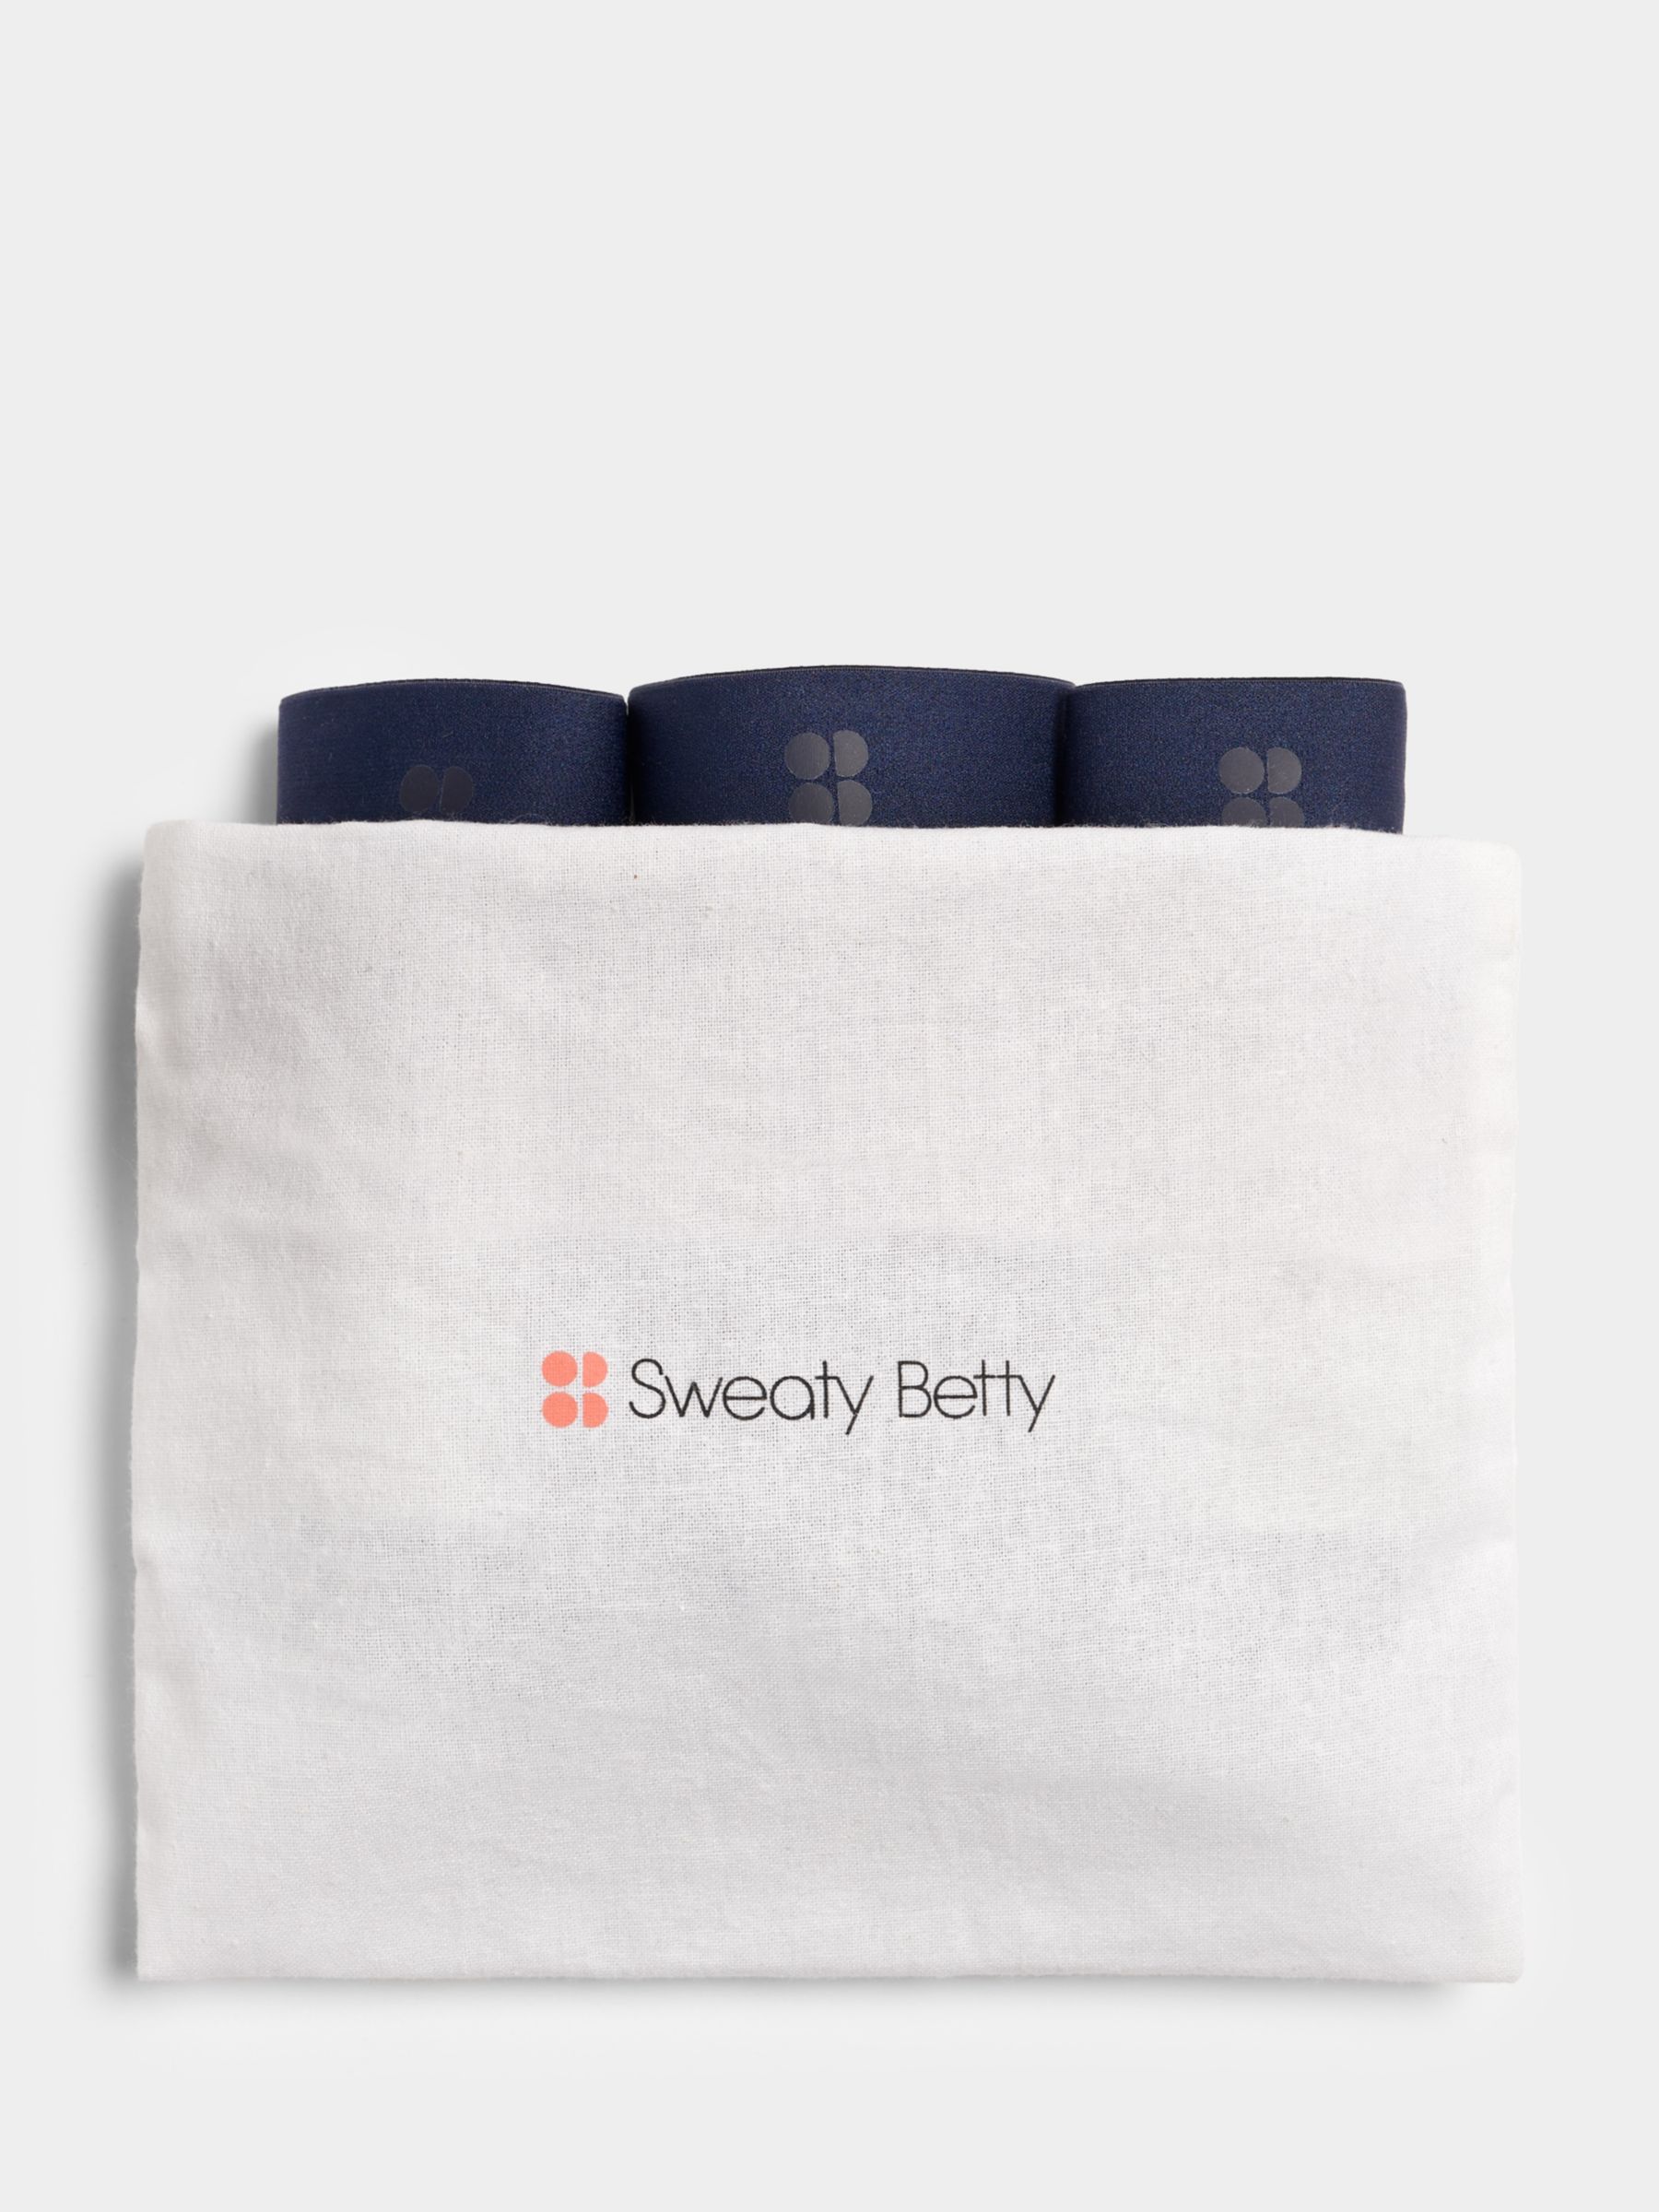 Sweaty Betty Sundown Soft Cotton Brief, Pack of 3, Navy Blue Heather, XS